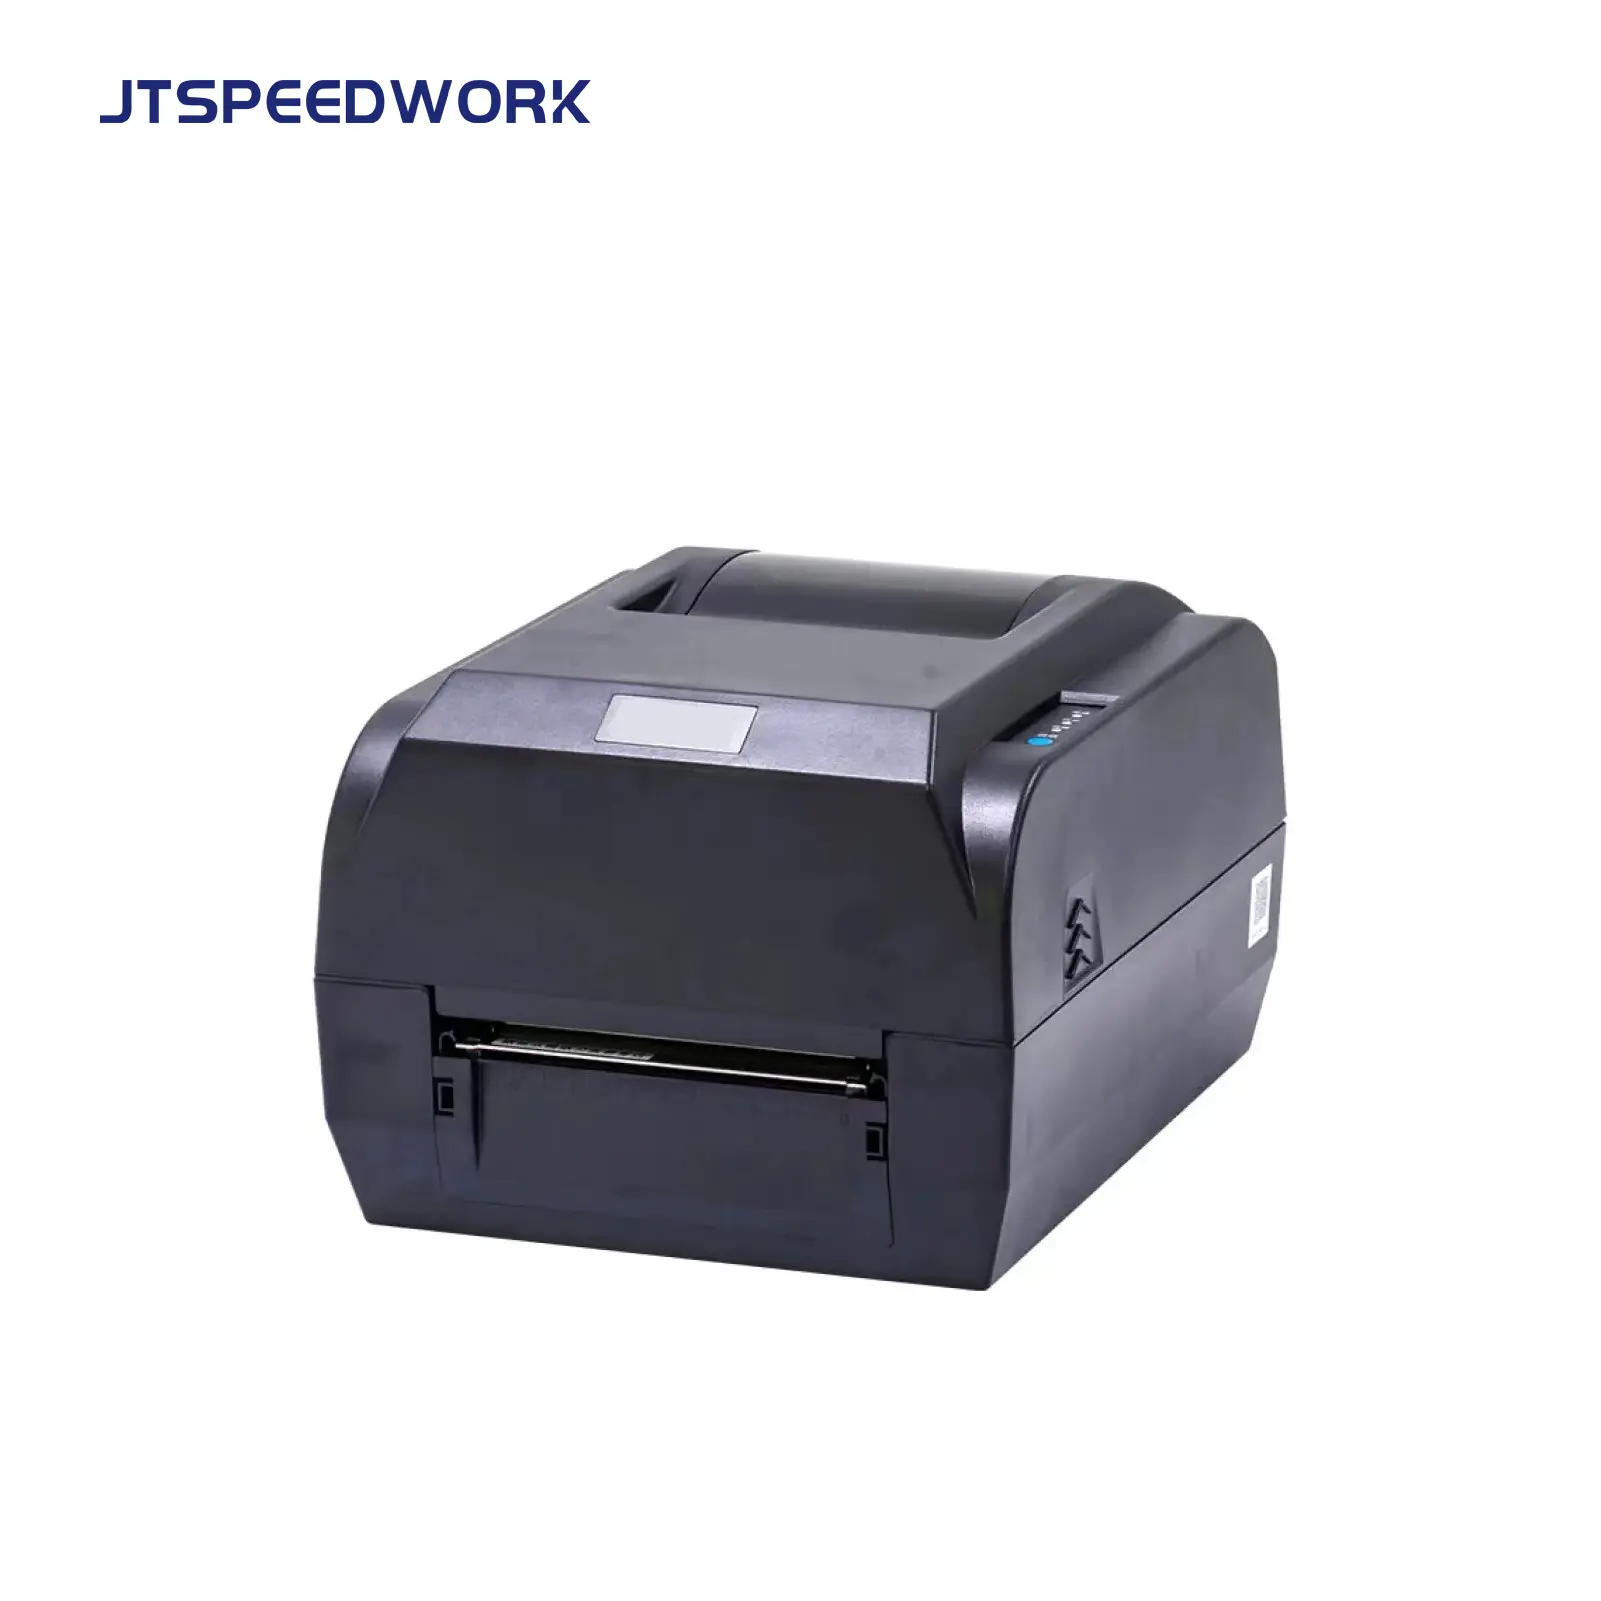 JT-DL630 Printer Support Rfid Single Card Linen Reader Mobile Machine Sticker Label Thermal Tag Wristband RFID Printer